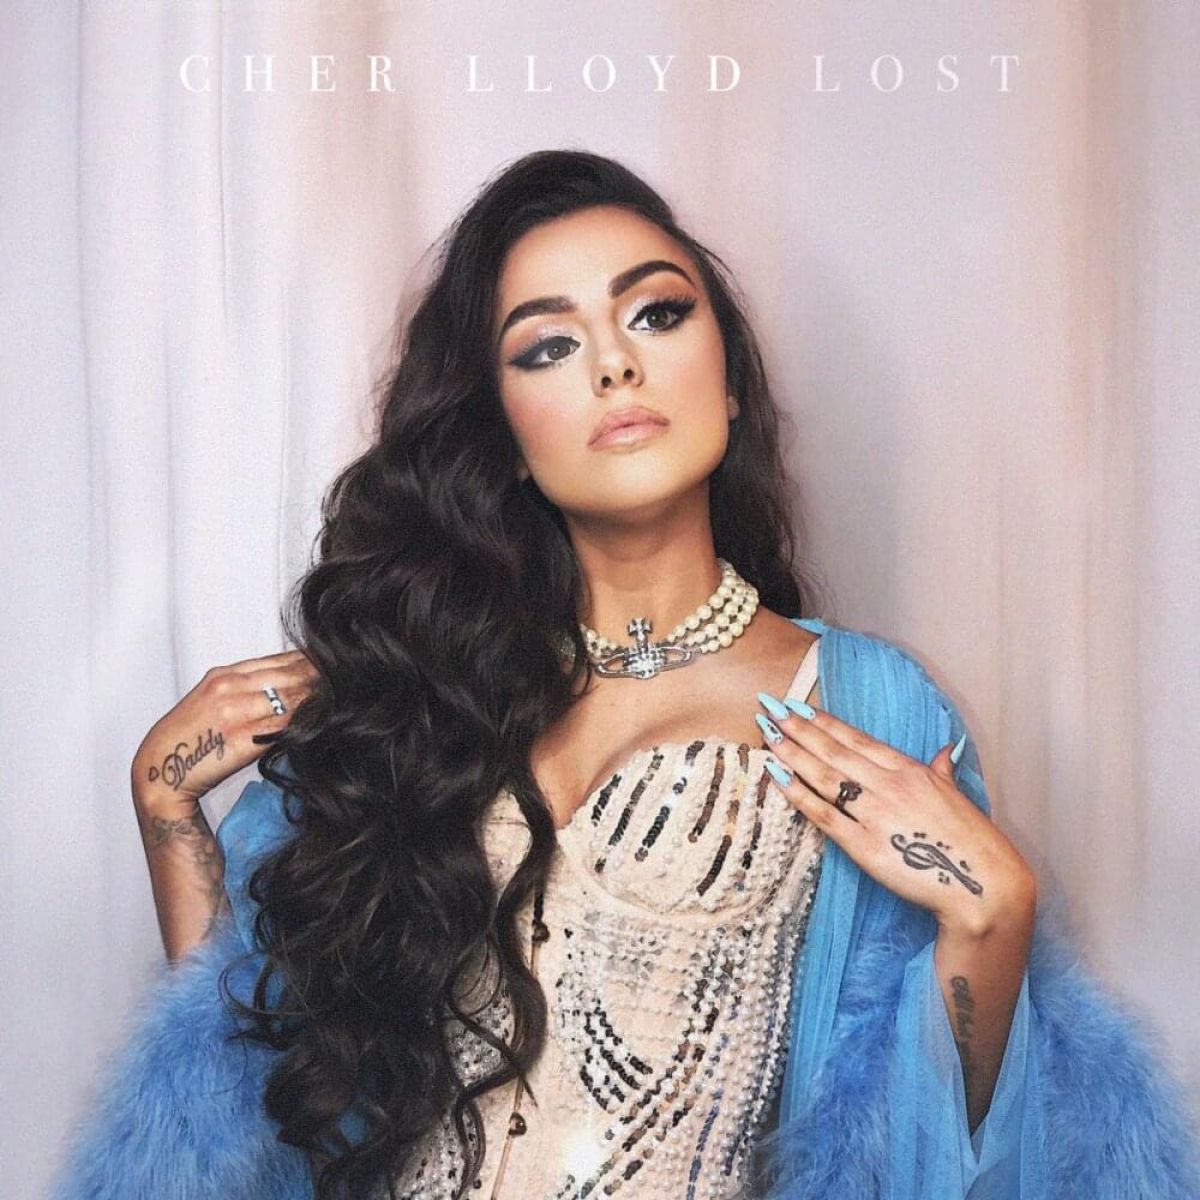 Cher Lloyd Photoshoot by Mila Austin for Lost Single 2020